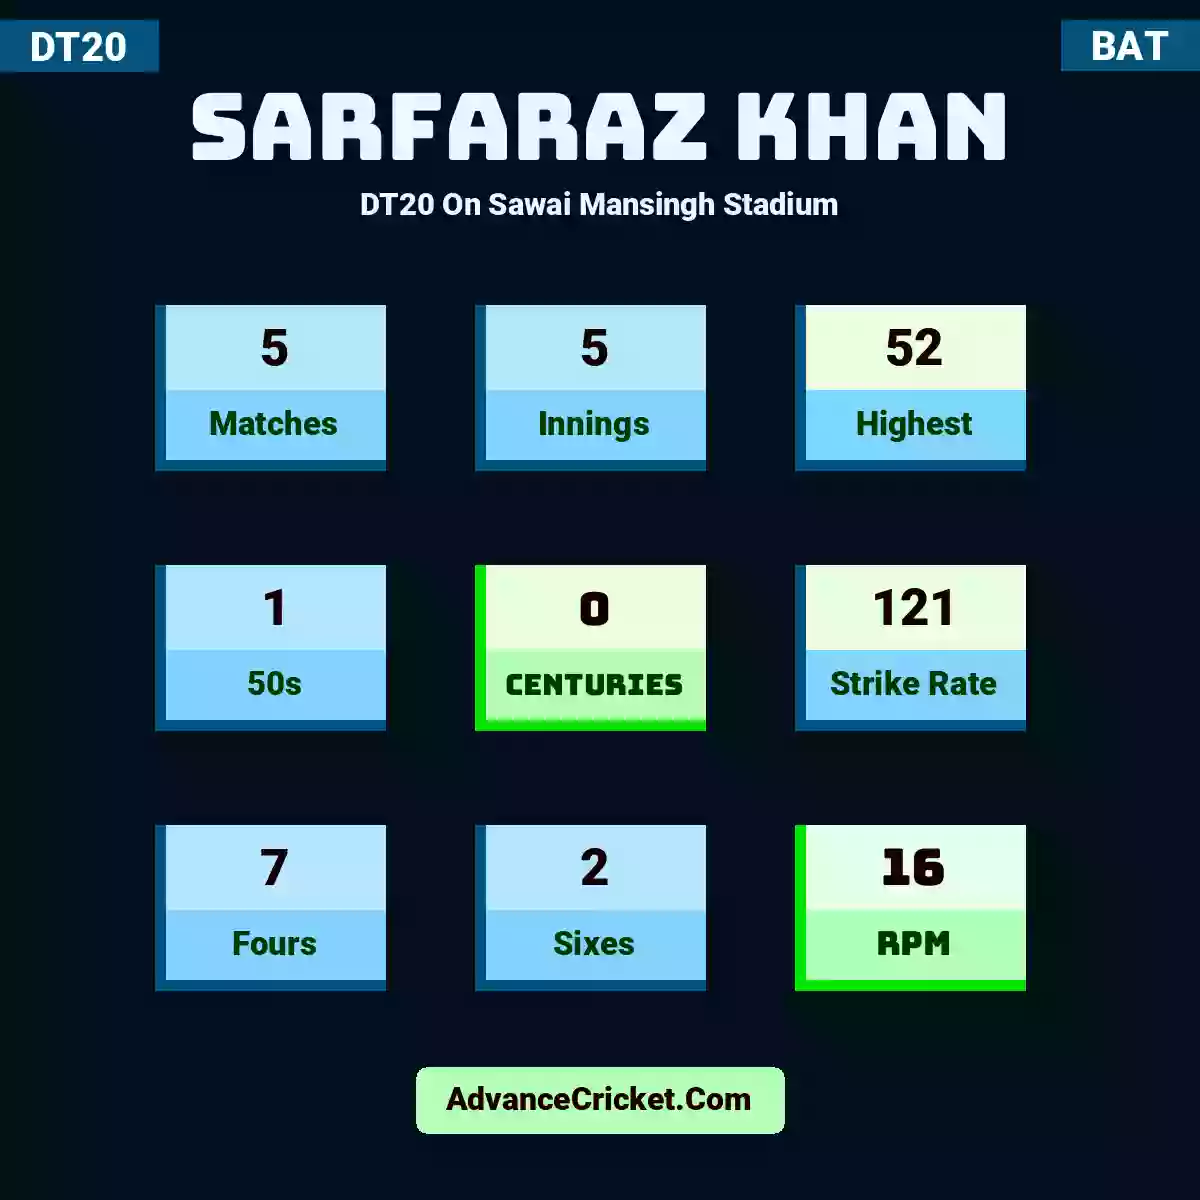 Sarfaraz Khan DT20  On Sawai Mansingh Stadium, Sarfaraz Khan played 5 matches, scored 52 runs as highest, 1 half-centuries, and 0 centuries, with a strike rate of 121. S.Khan hit 7 fours and 2 sixes, with an RPM of 16.